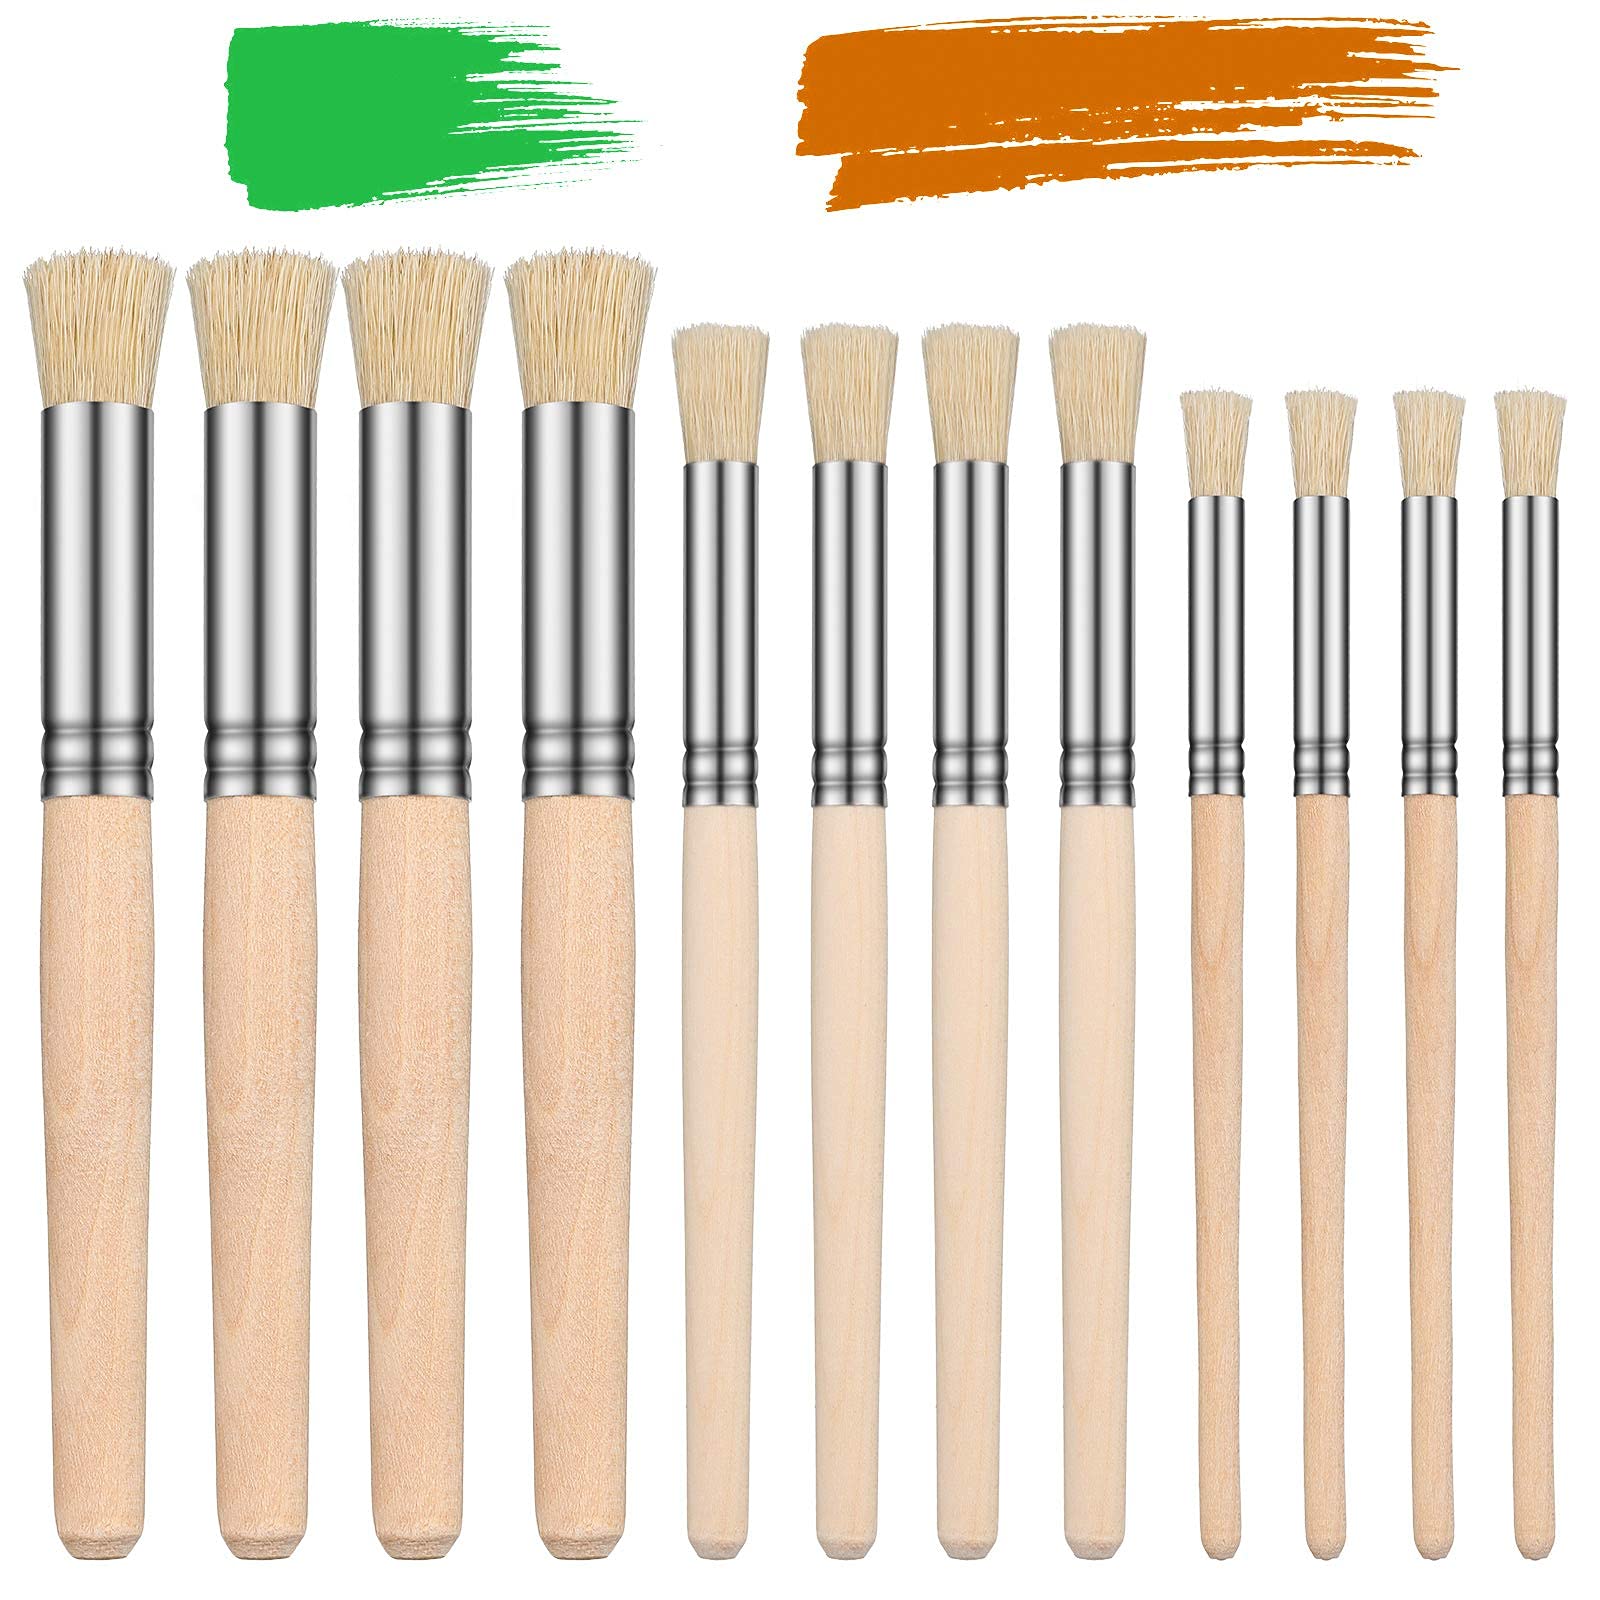  Set of 7 Flat Paint Brushes for Acrylic Painting, Soft